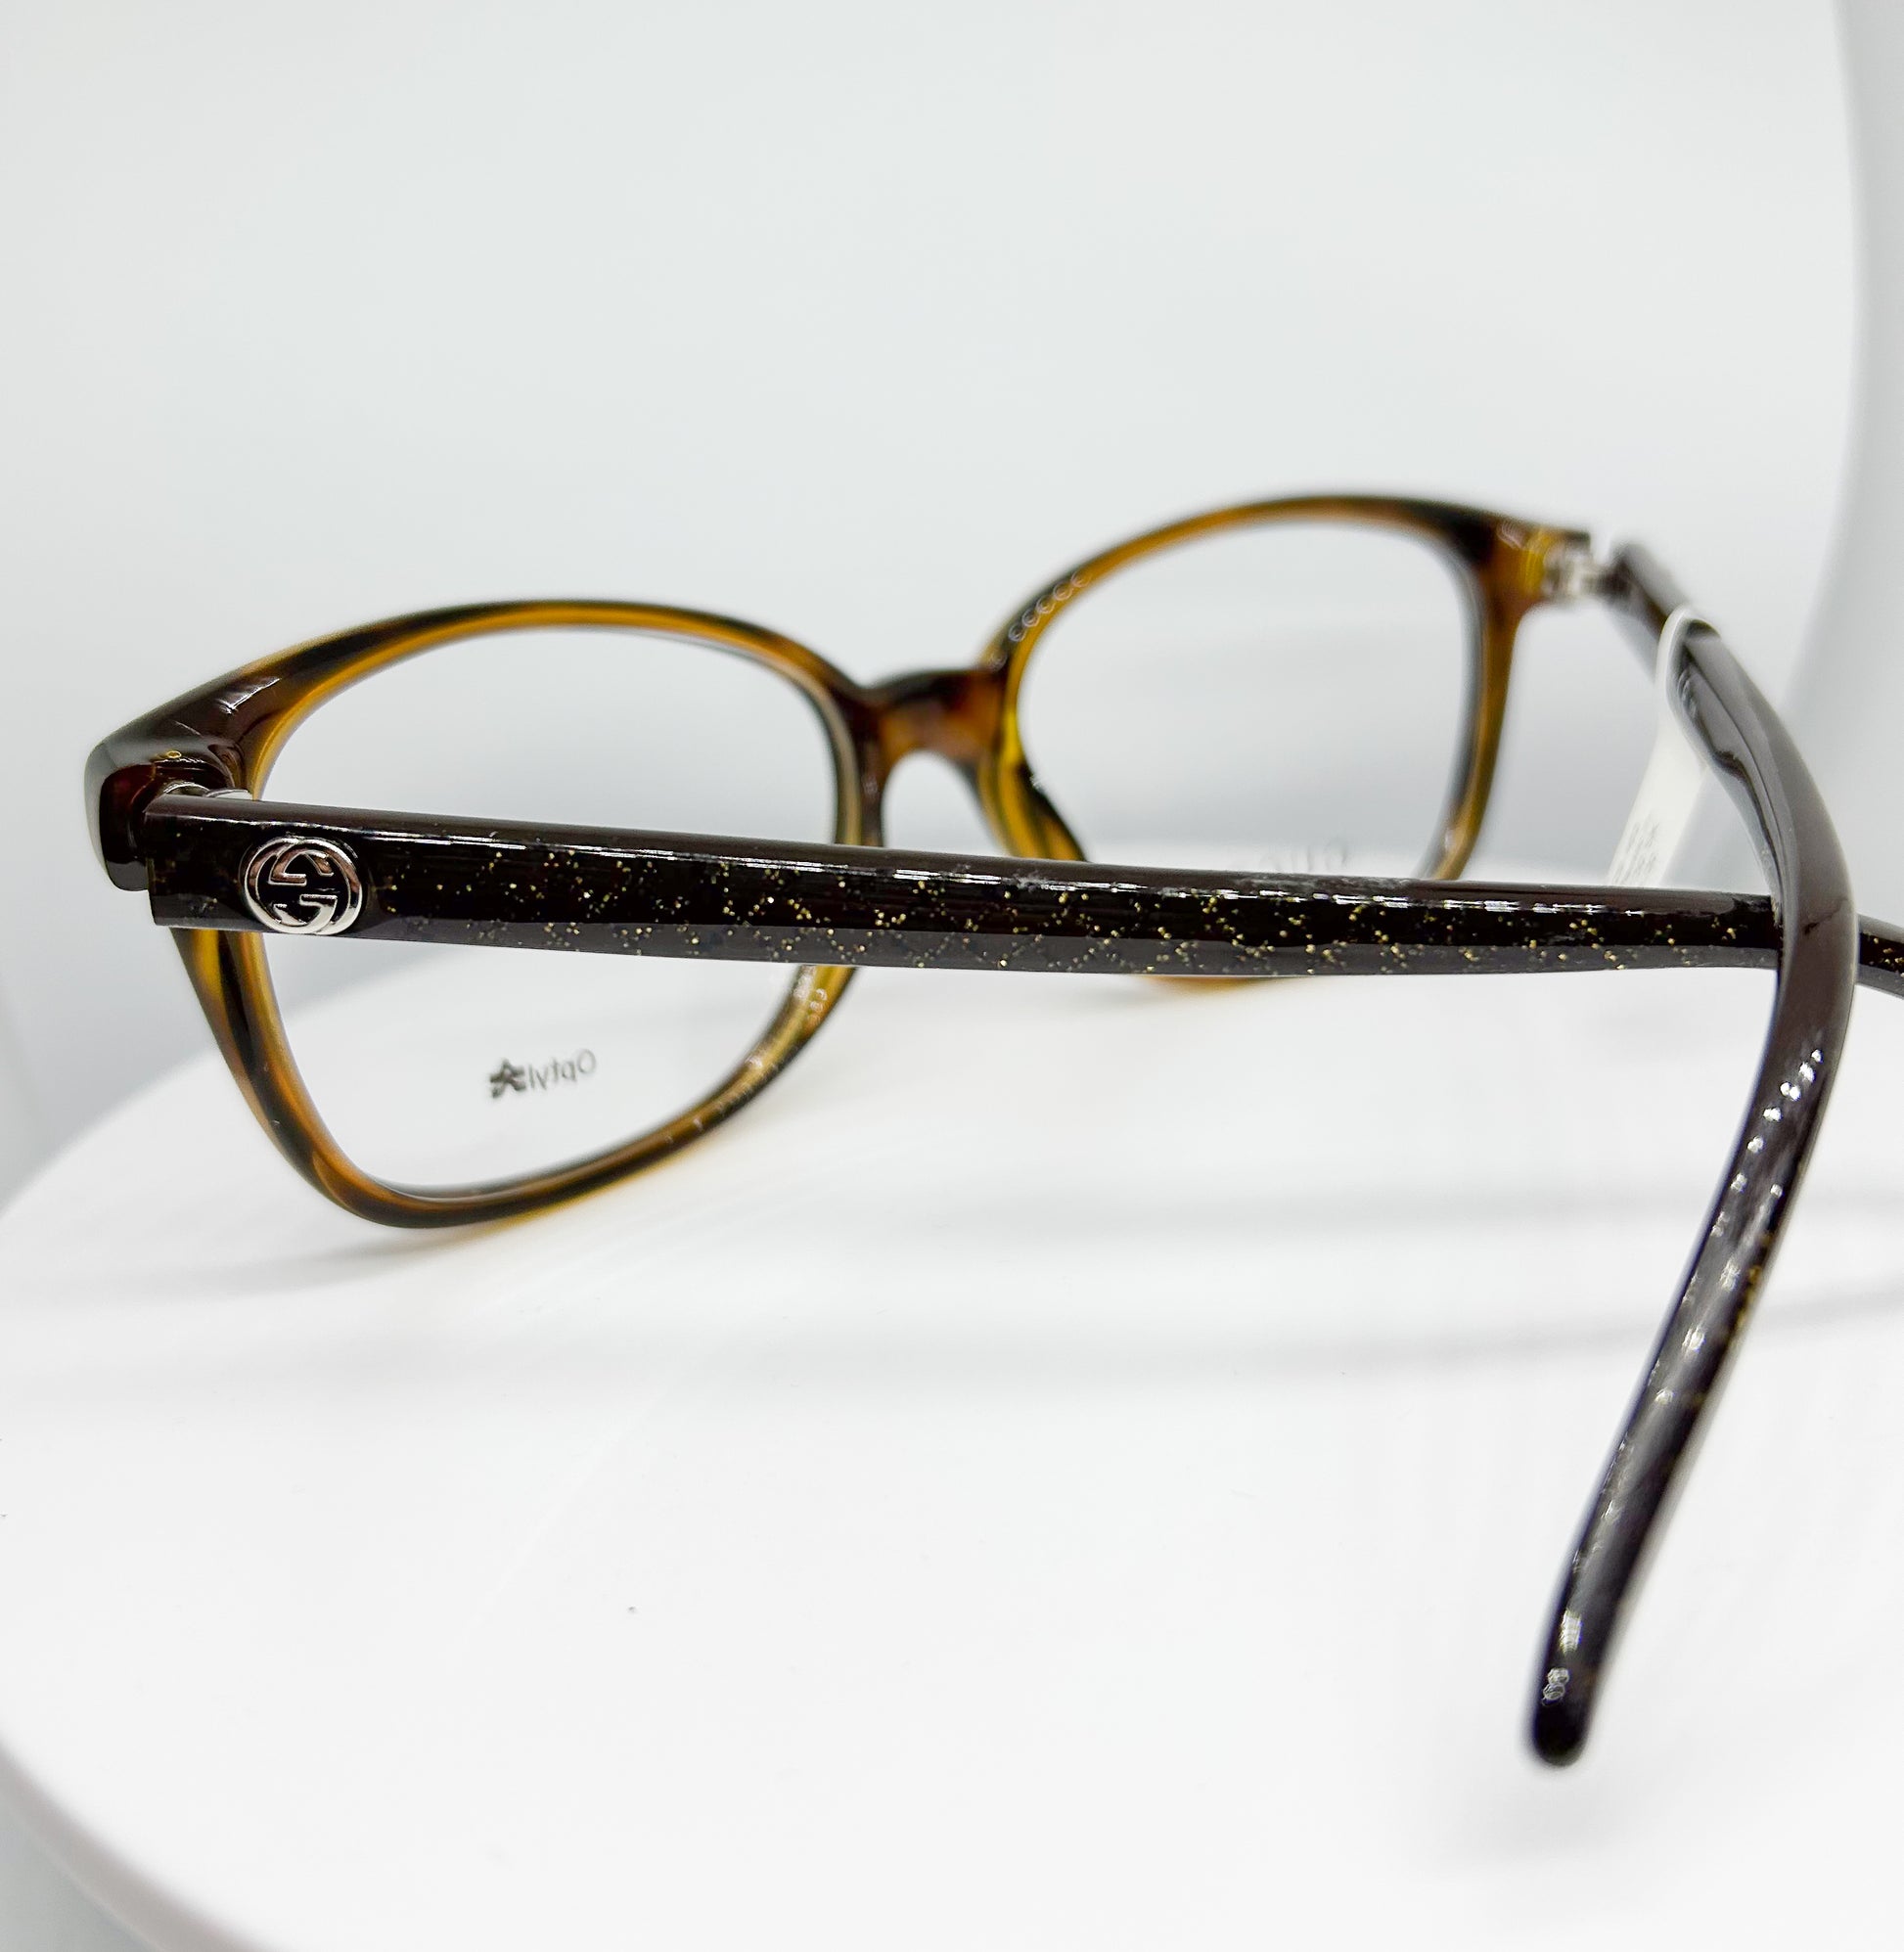   Eyewear from Adair Eyewear - Over 40 years of customer service excellence